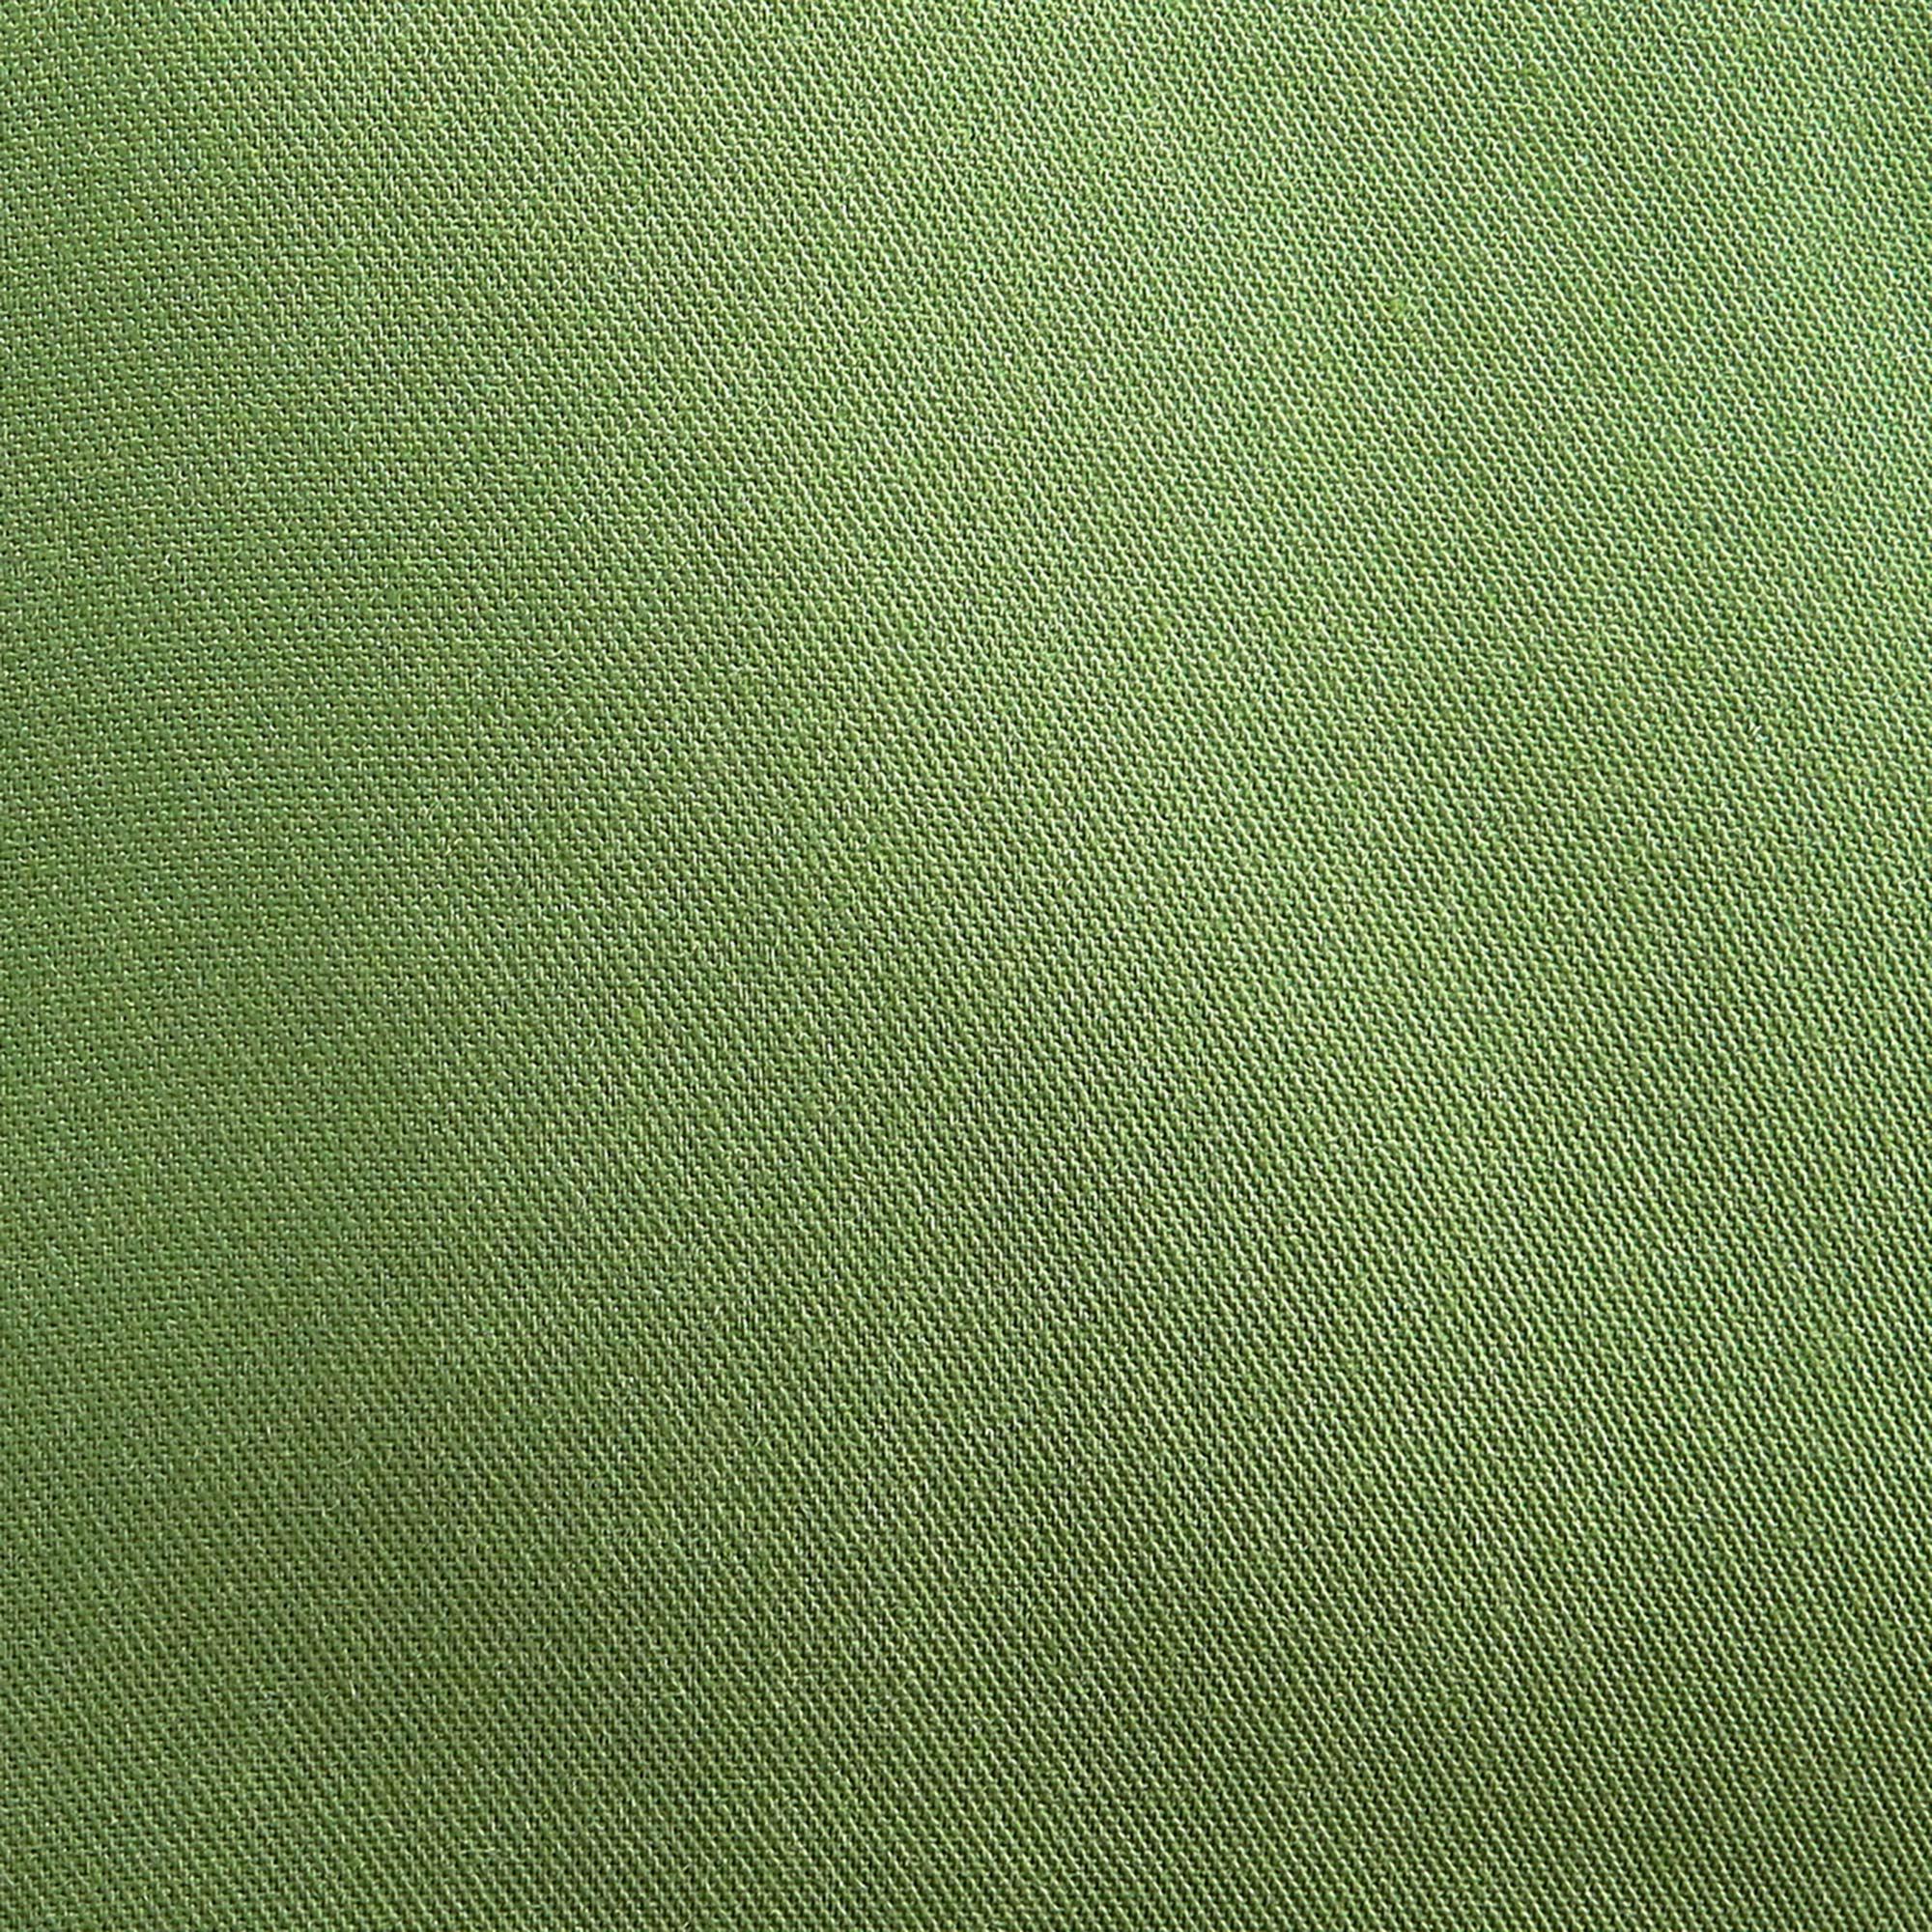 Кресло-качалка Rattan grand white wash подушками, цвет зелёный - фото 7